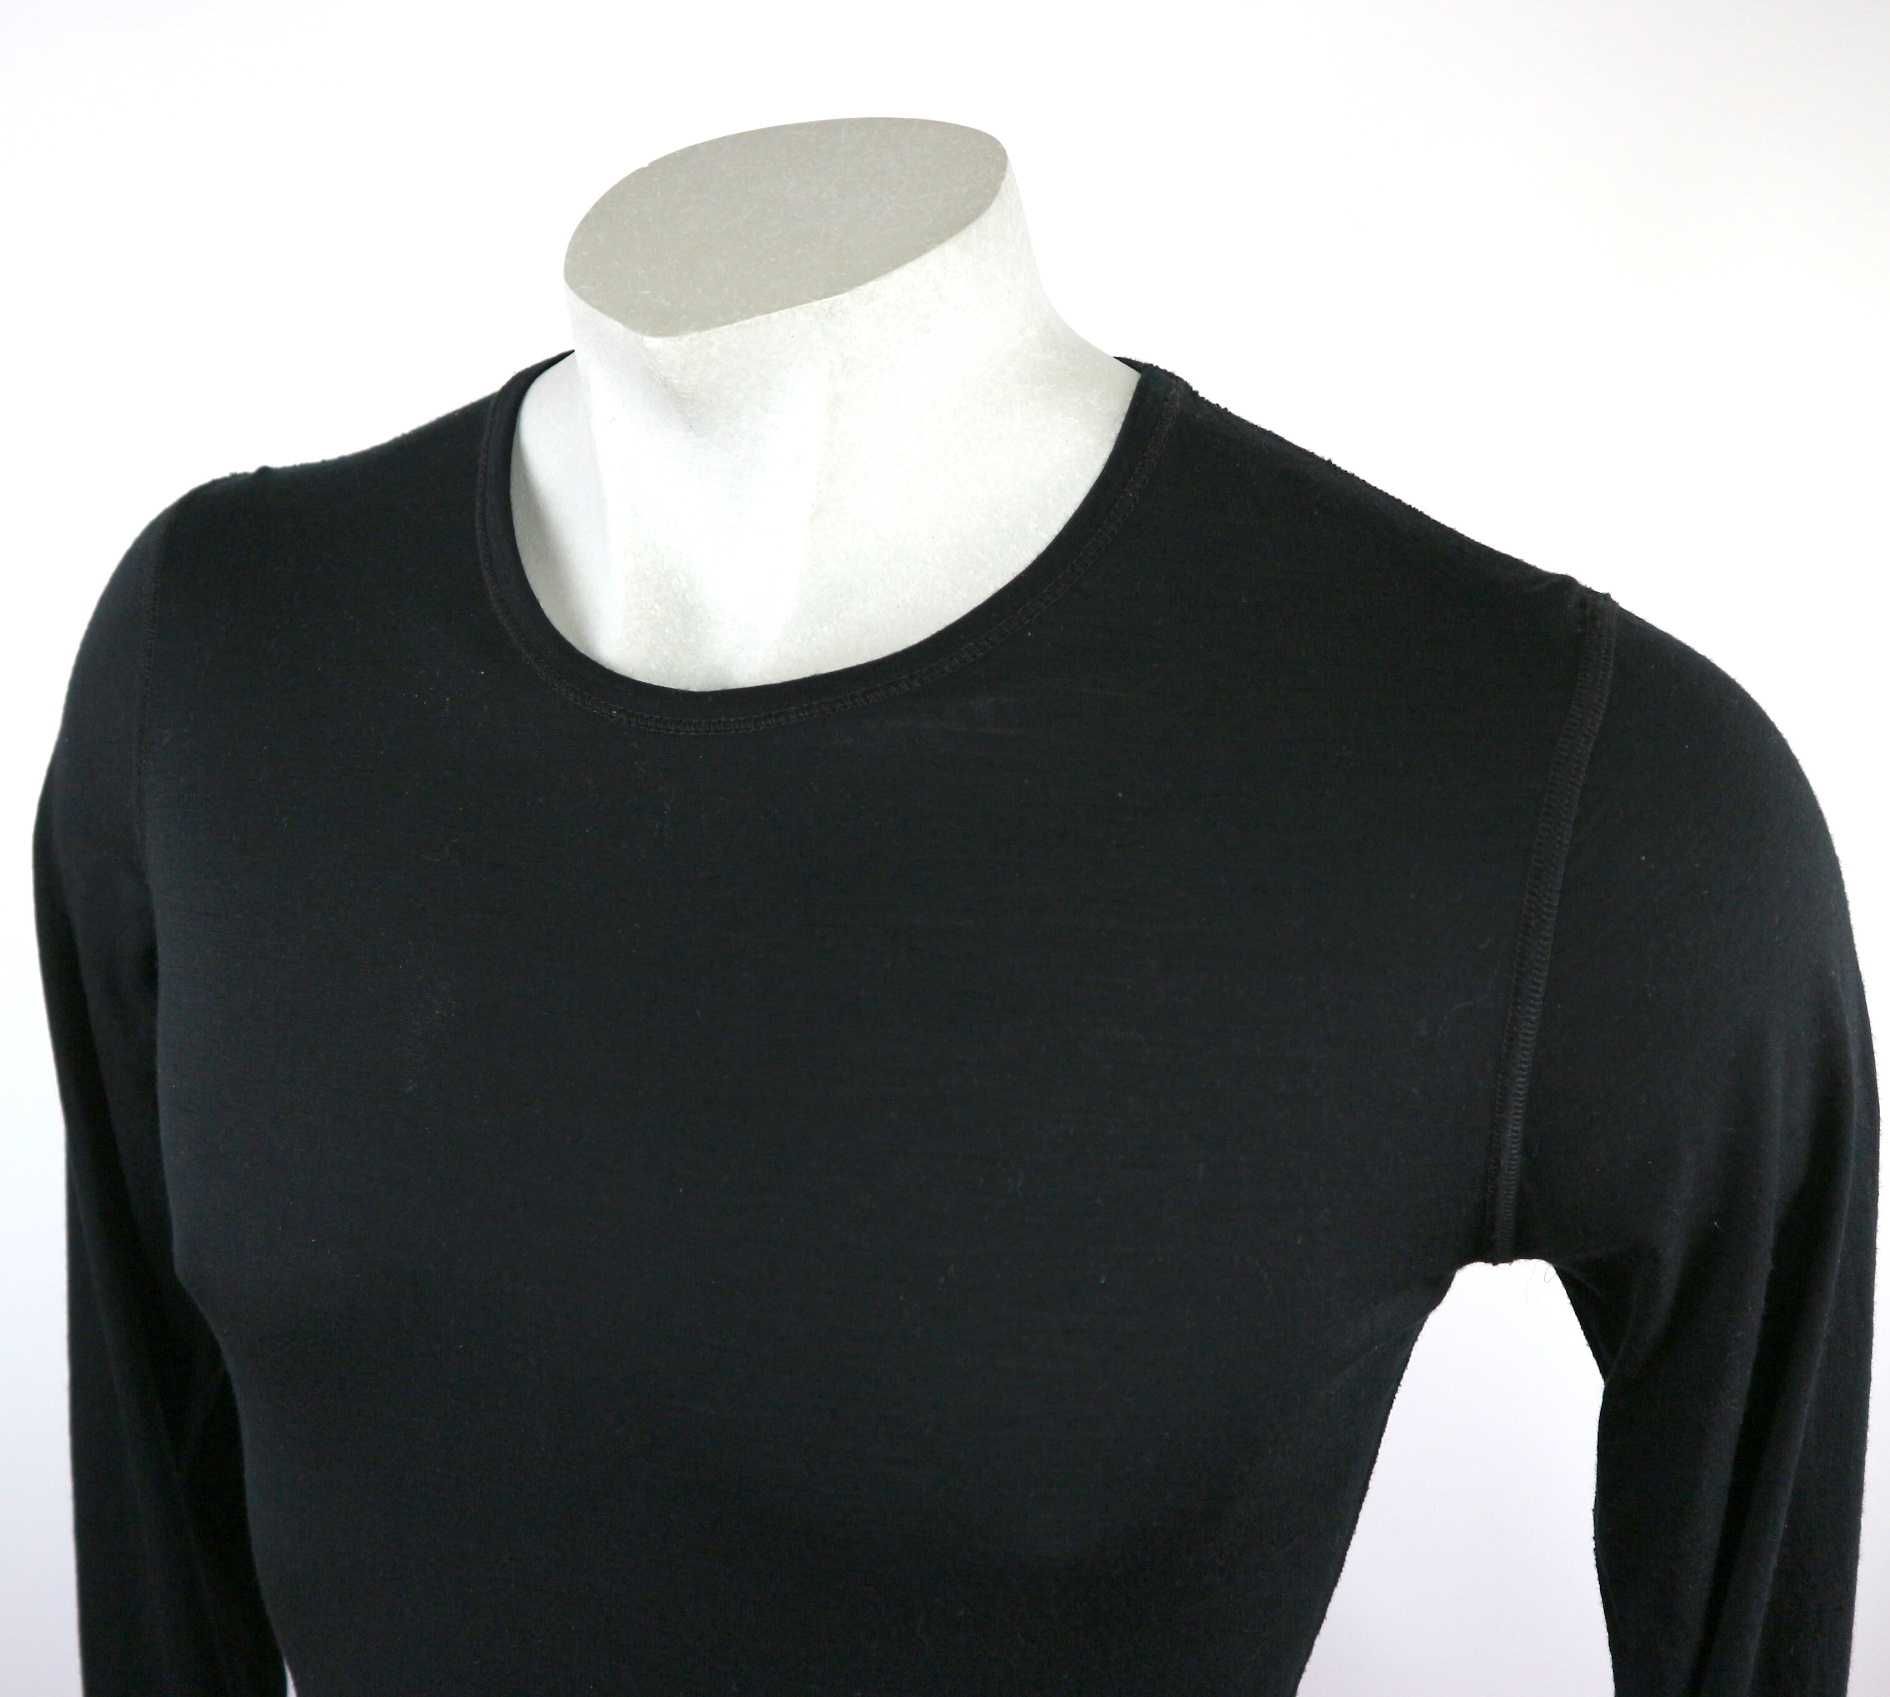 Wool by Elle koszulka outdoorowa termoaktywna 100% merino L